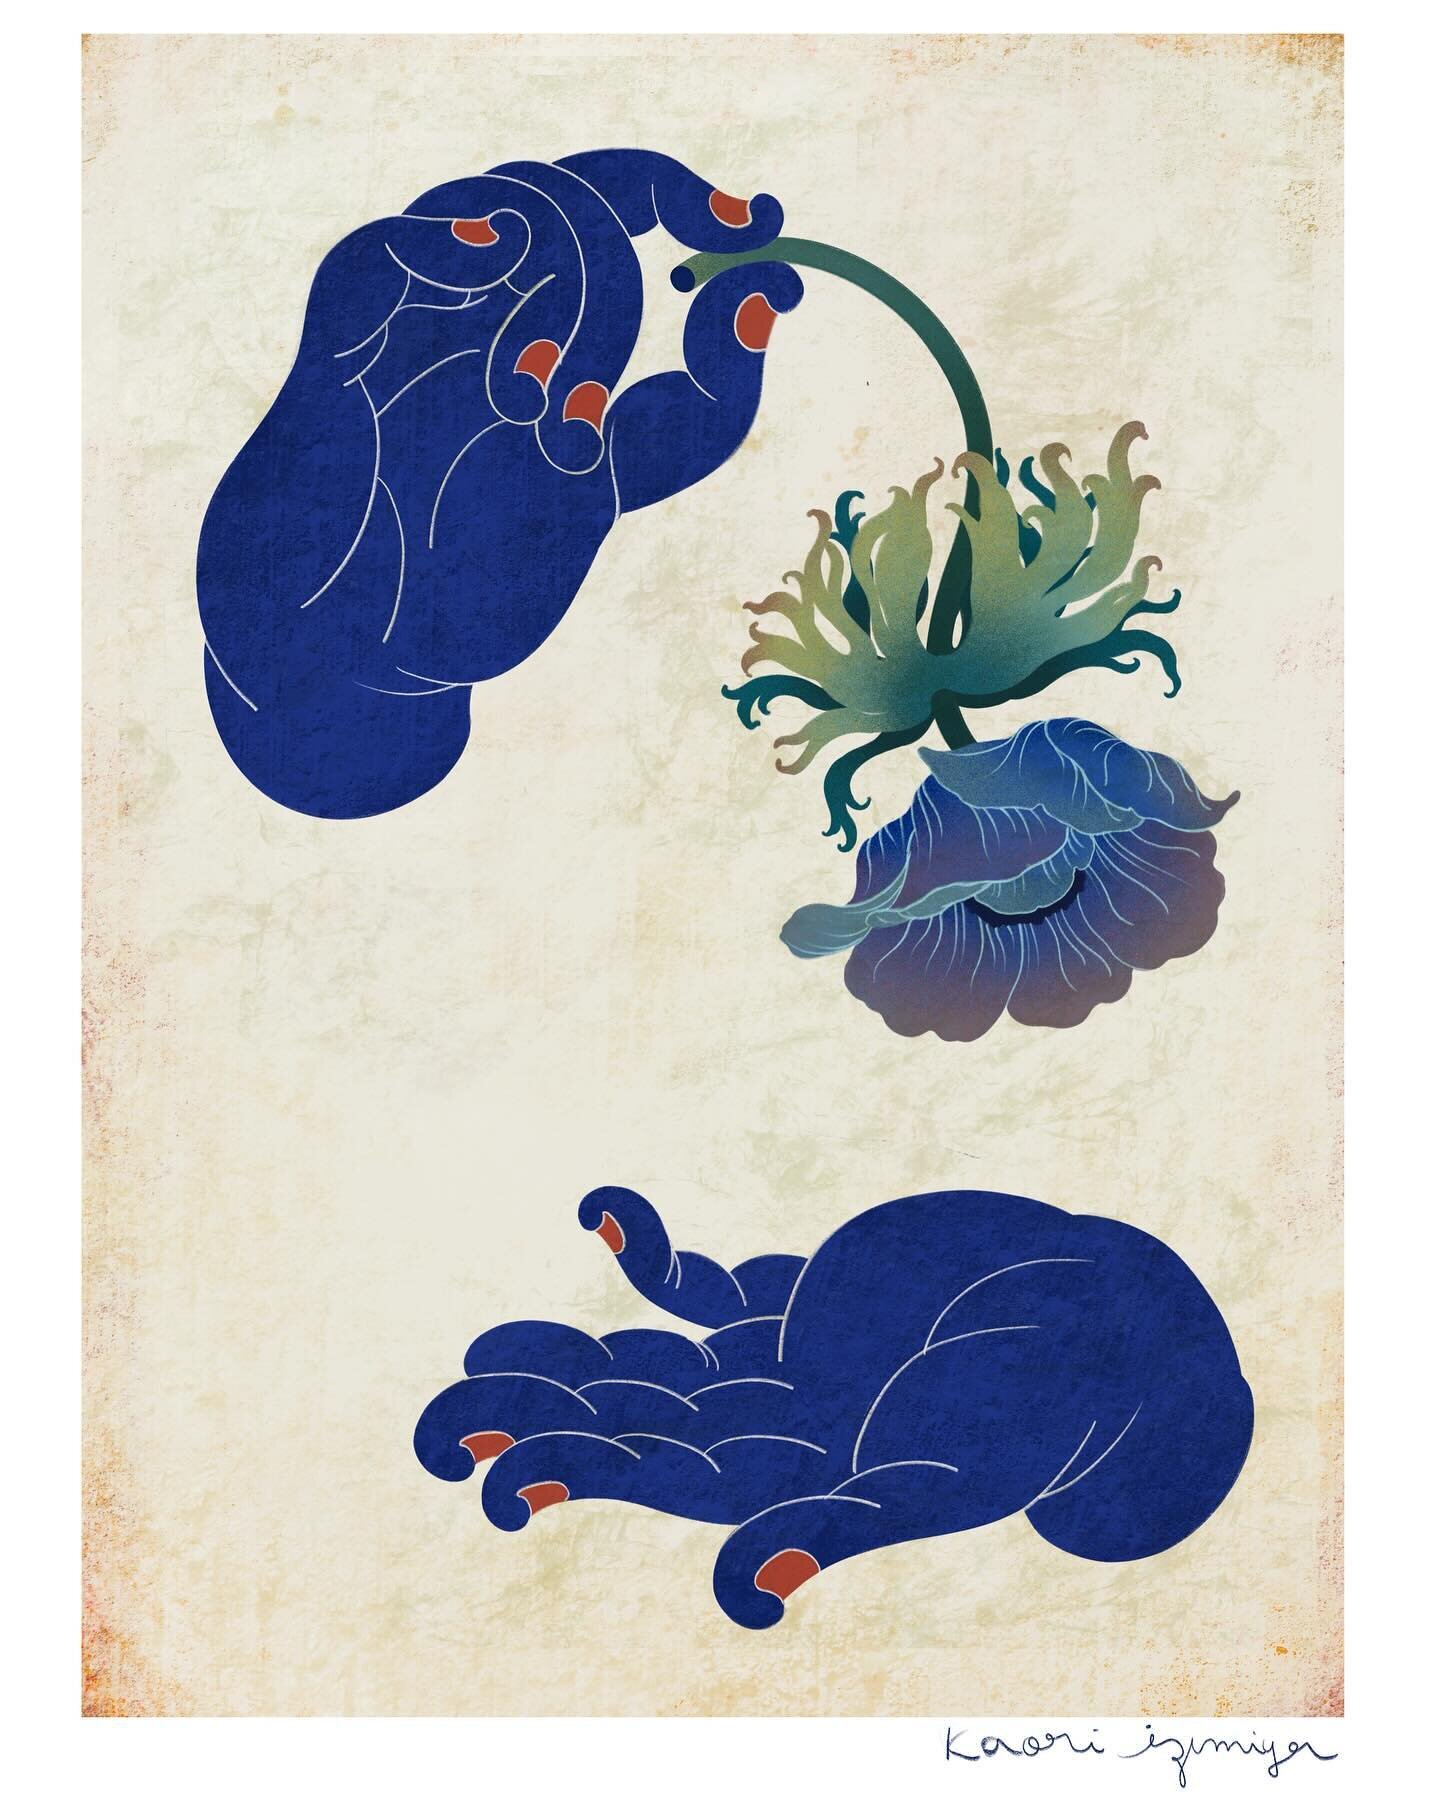 ＊Anemone poppy blue＊
.
.
.
.
.
#illustration #art #hand #blue #anemone #minimalism